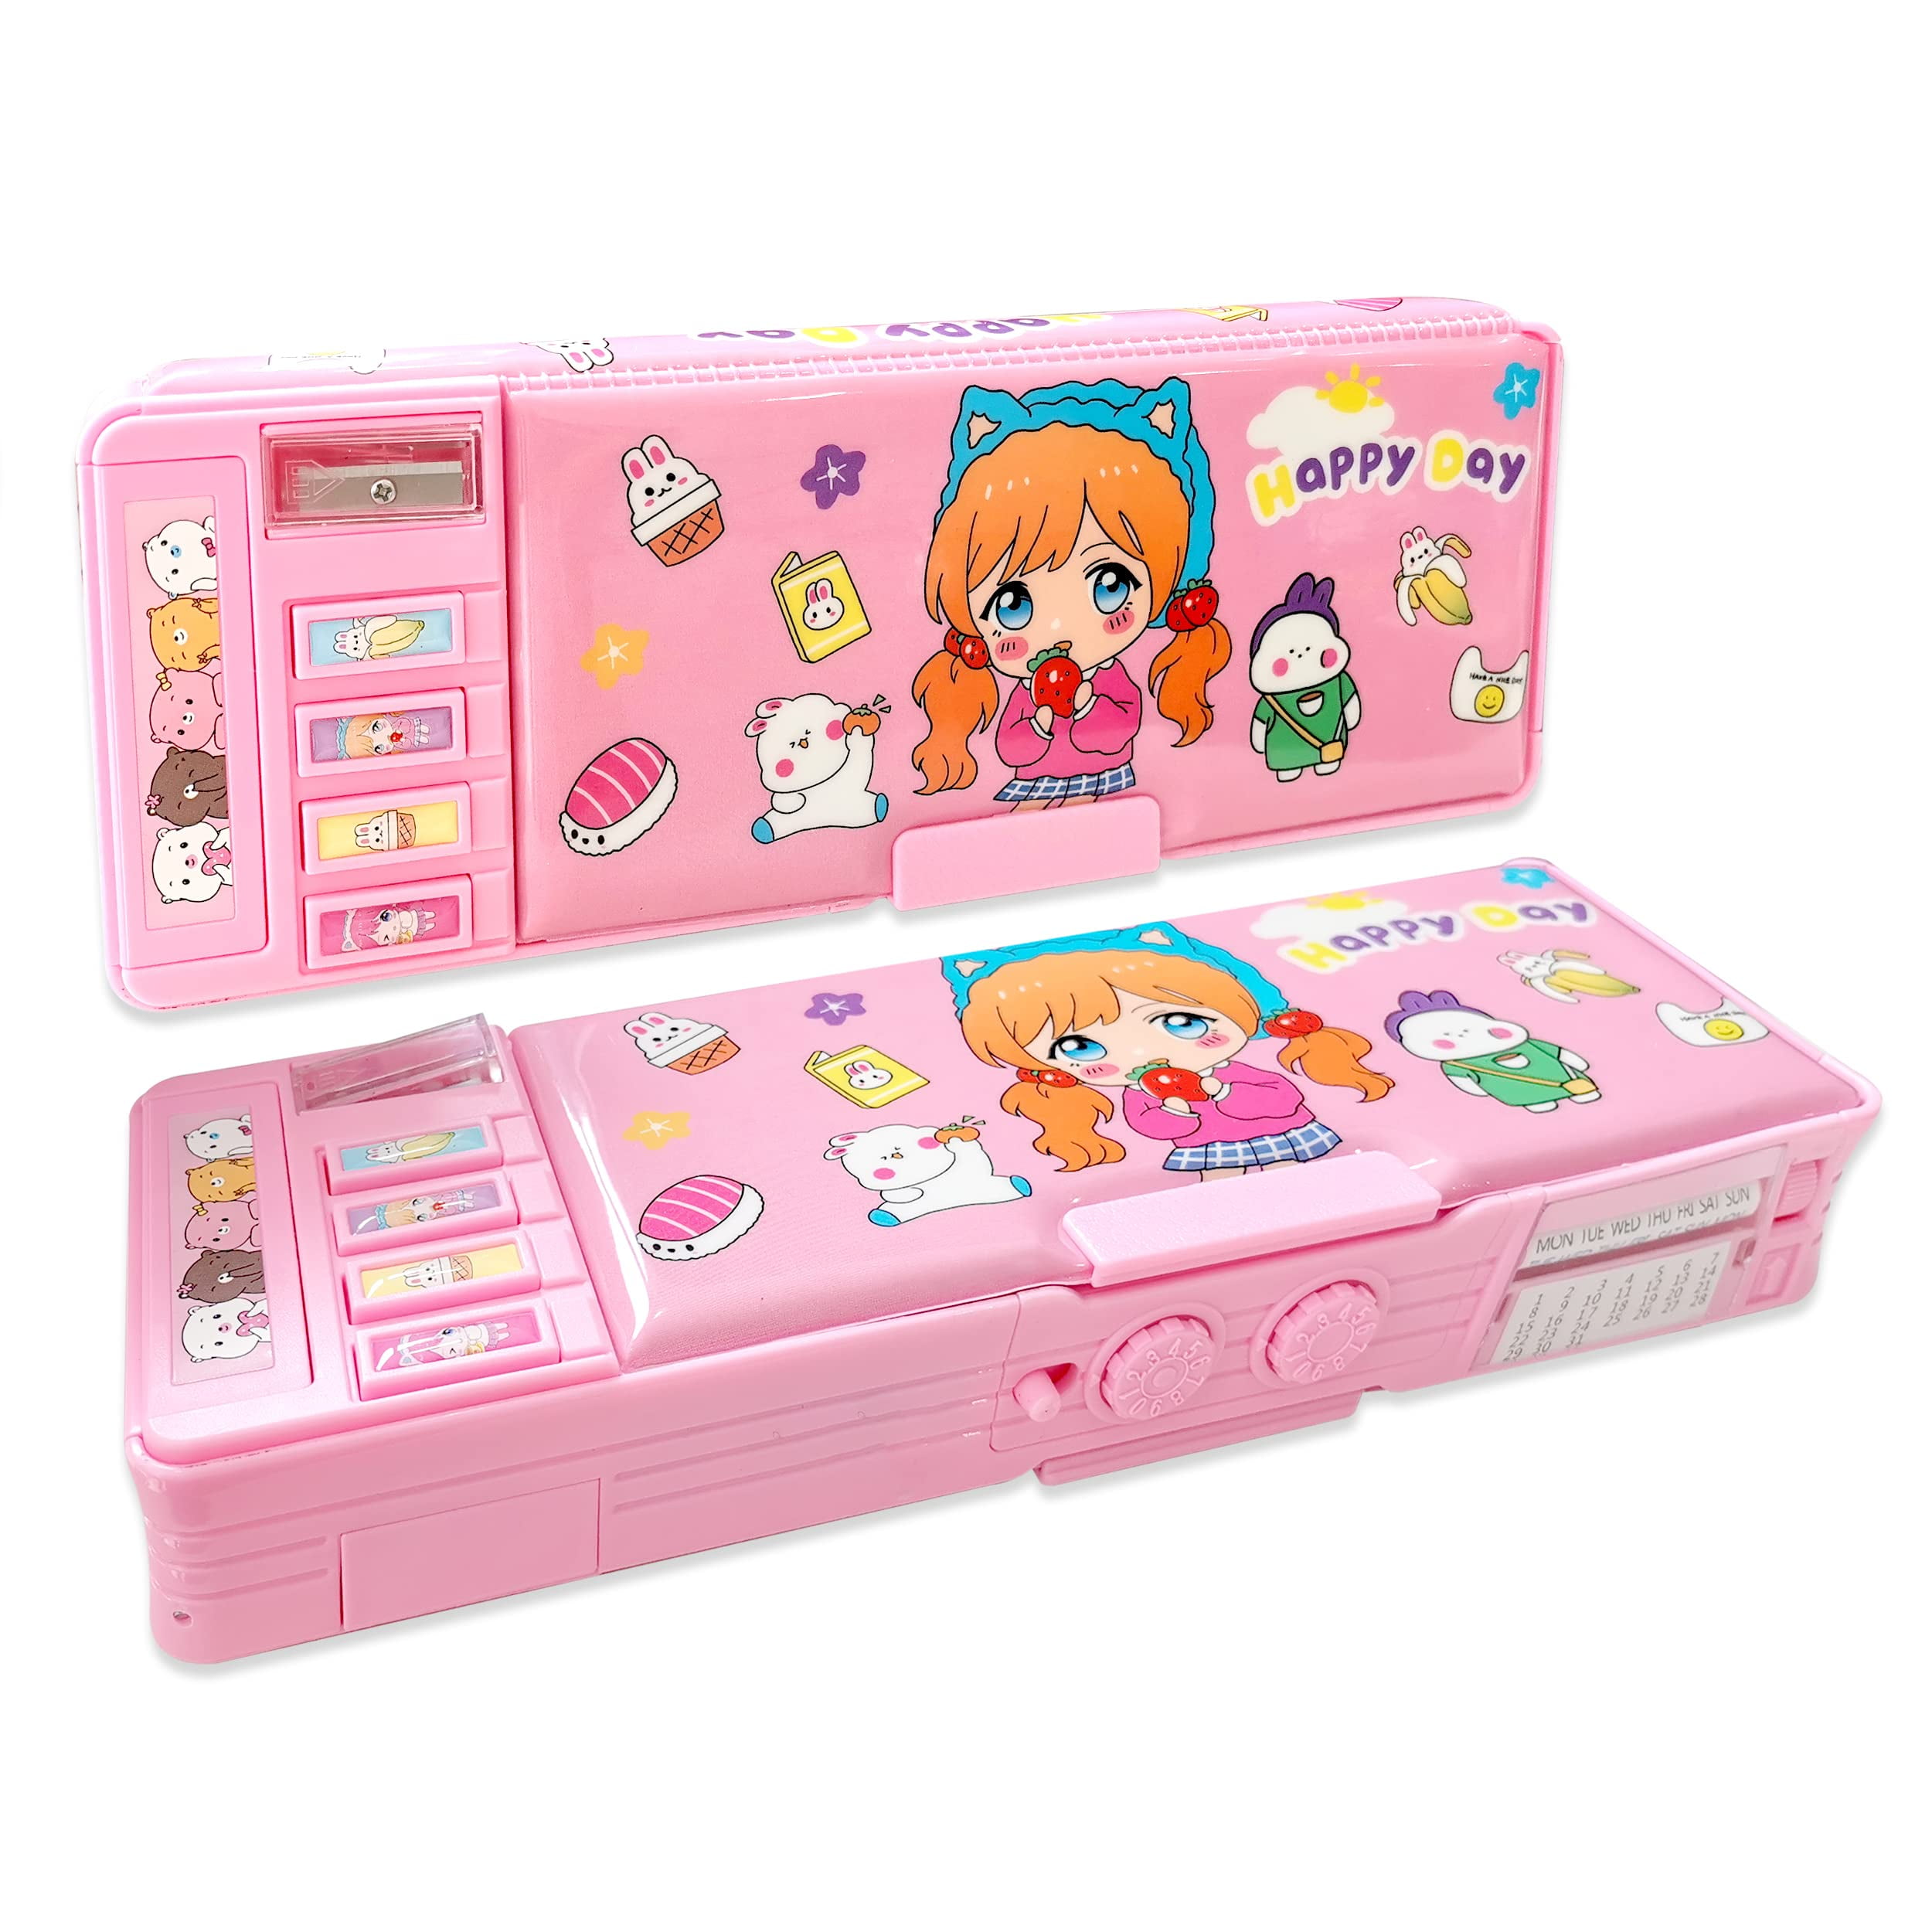 Pencil Box For Girls. Compartments Unique Stationery Set W/z Pop Ou